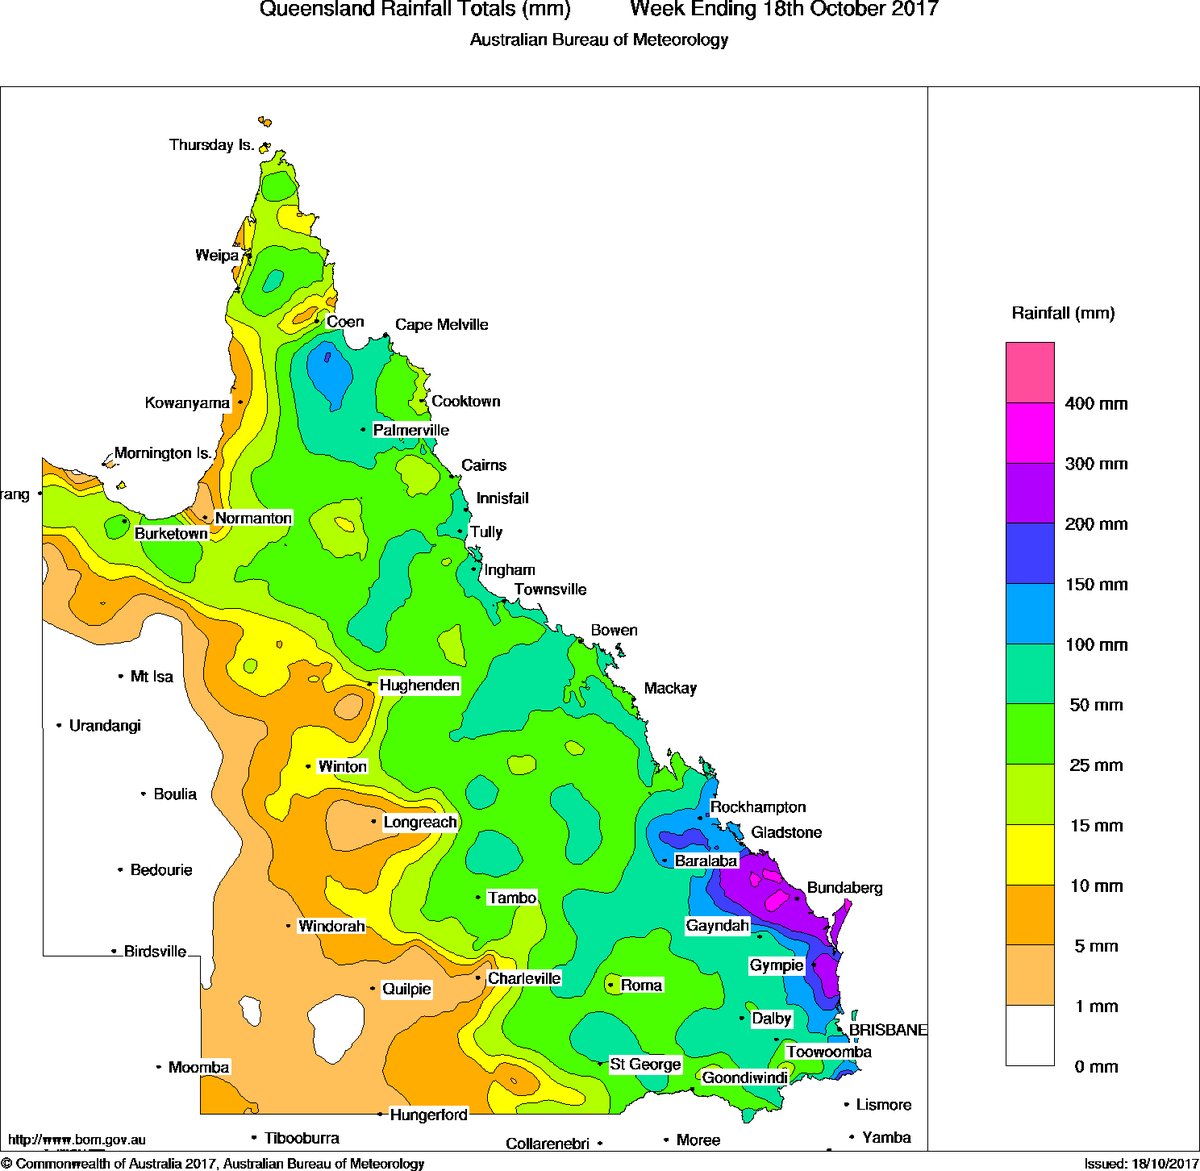 Queensland rainfall from October 16 - 18, 2017